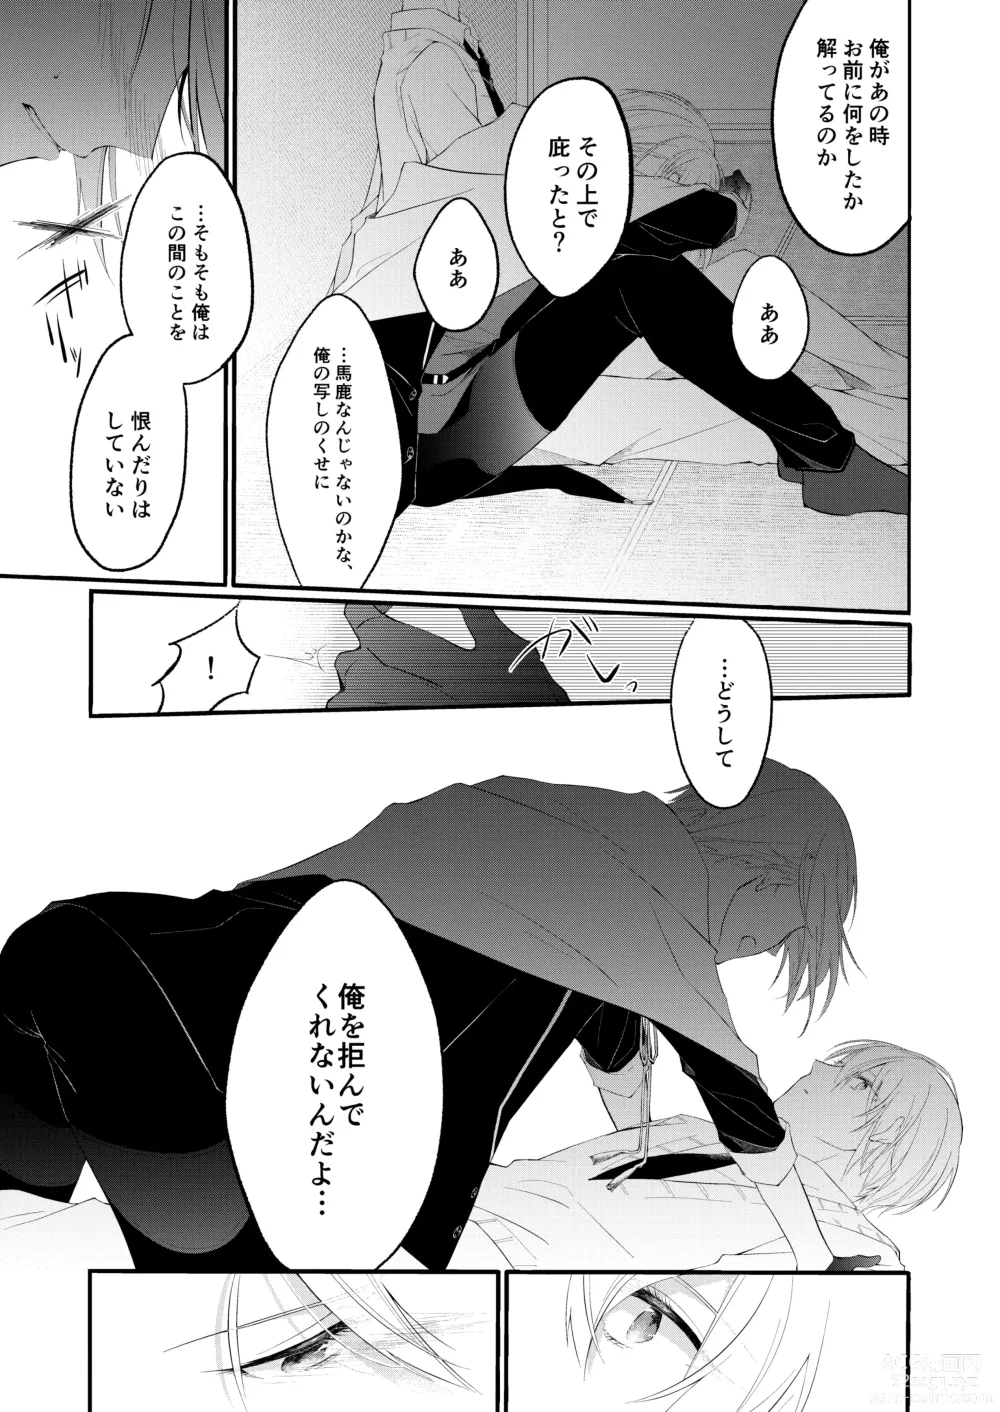 Page 22 of doujinshi Jiko Manzoku no ×××